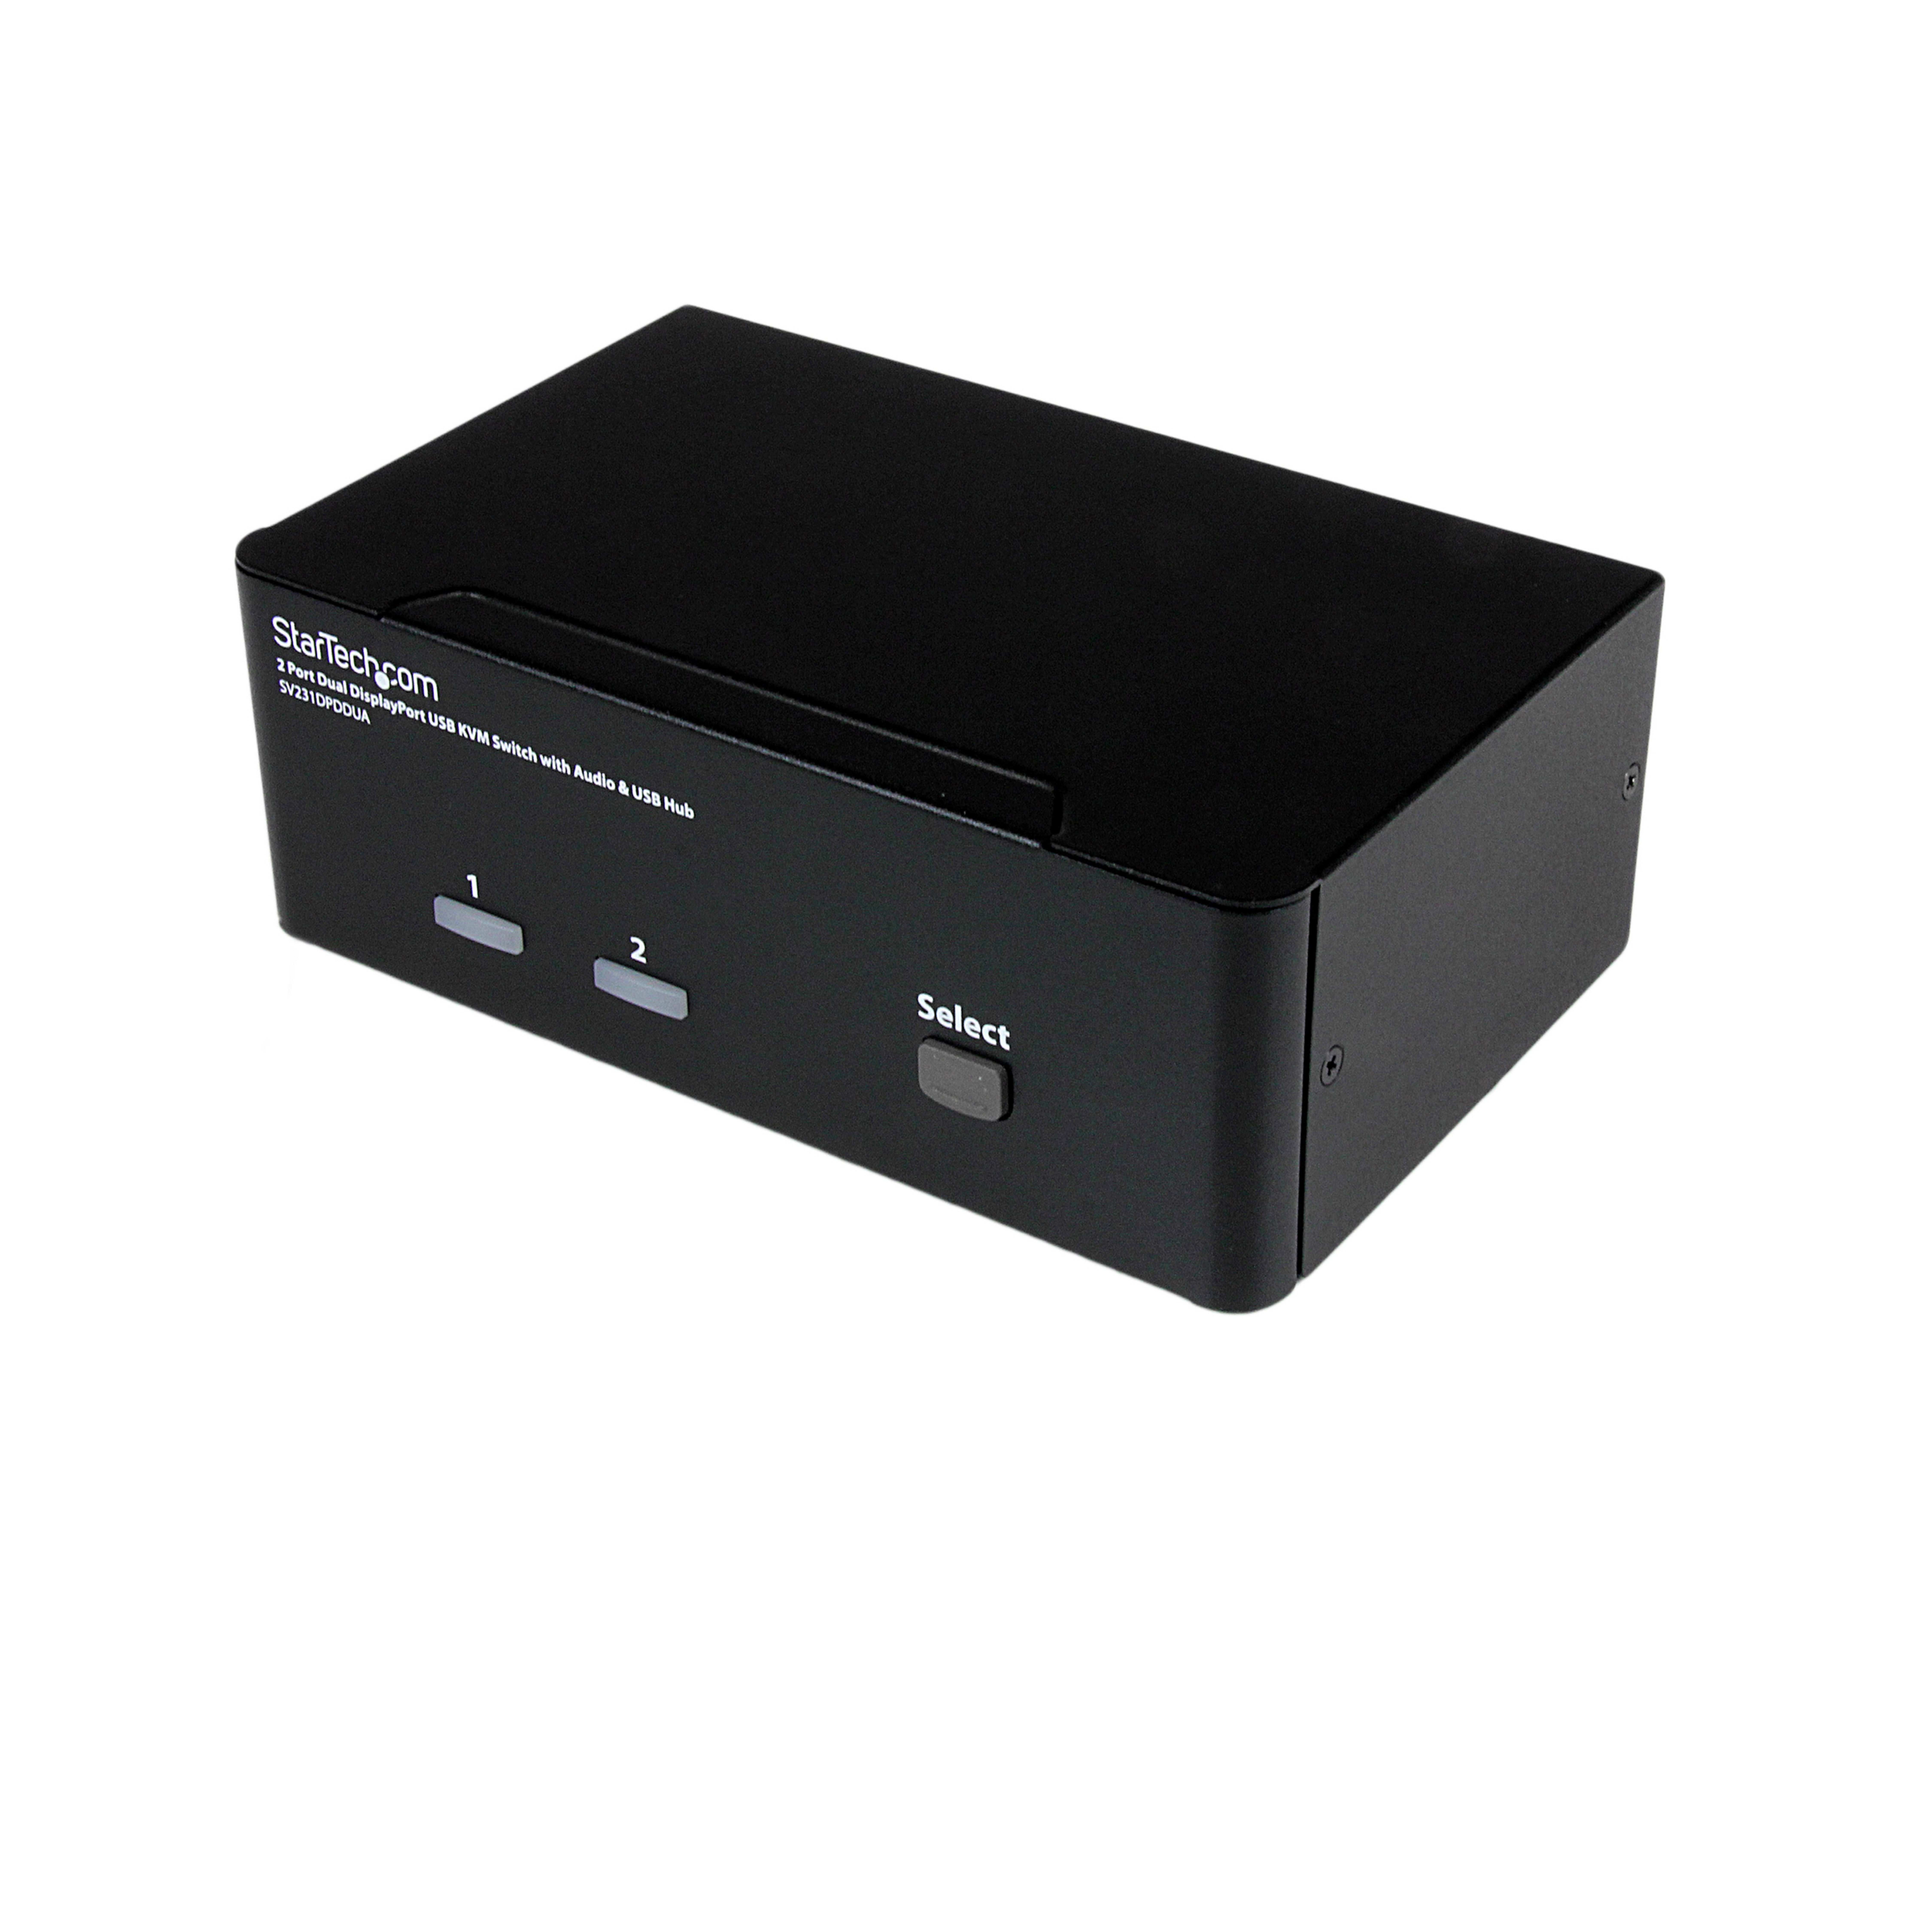 StarTech.com 2 Port Dual DisplayPort USB KVM Switch mit Audio